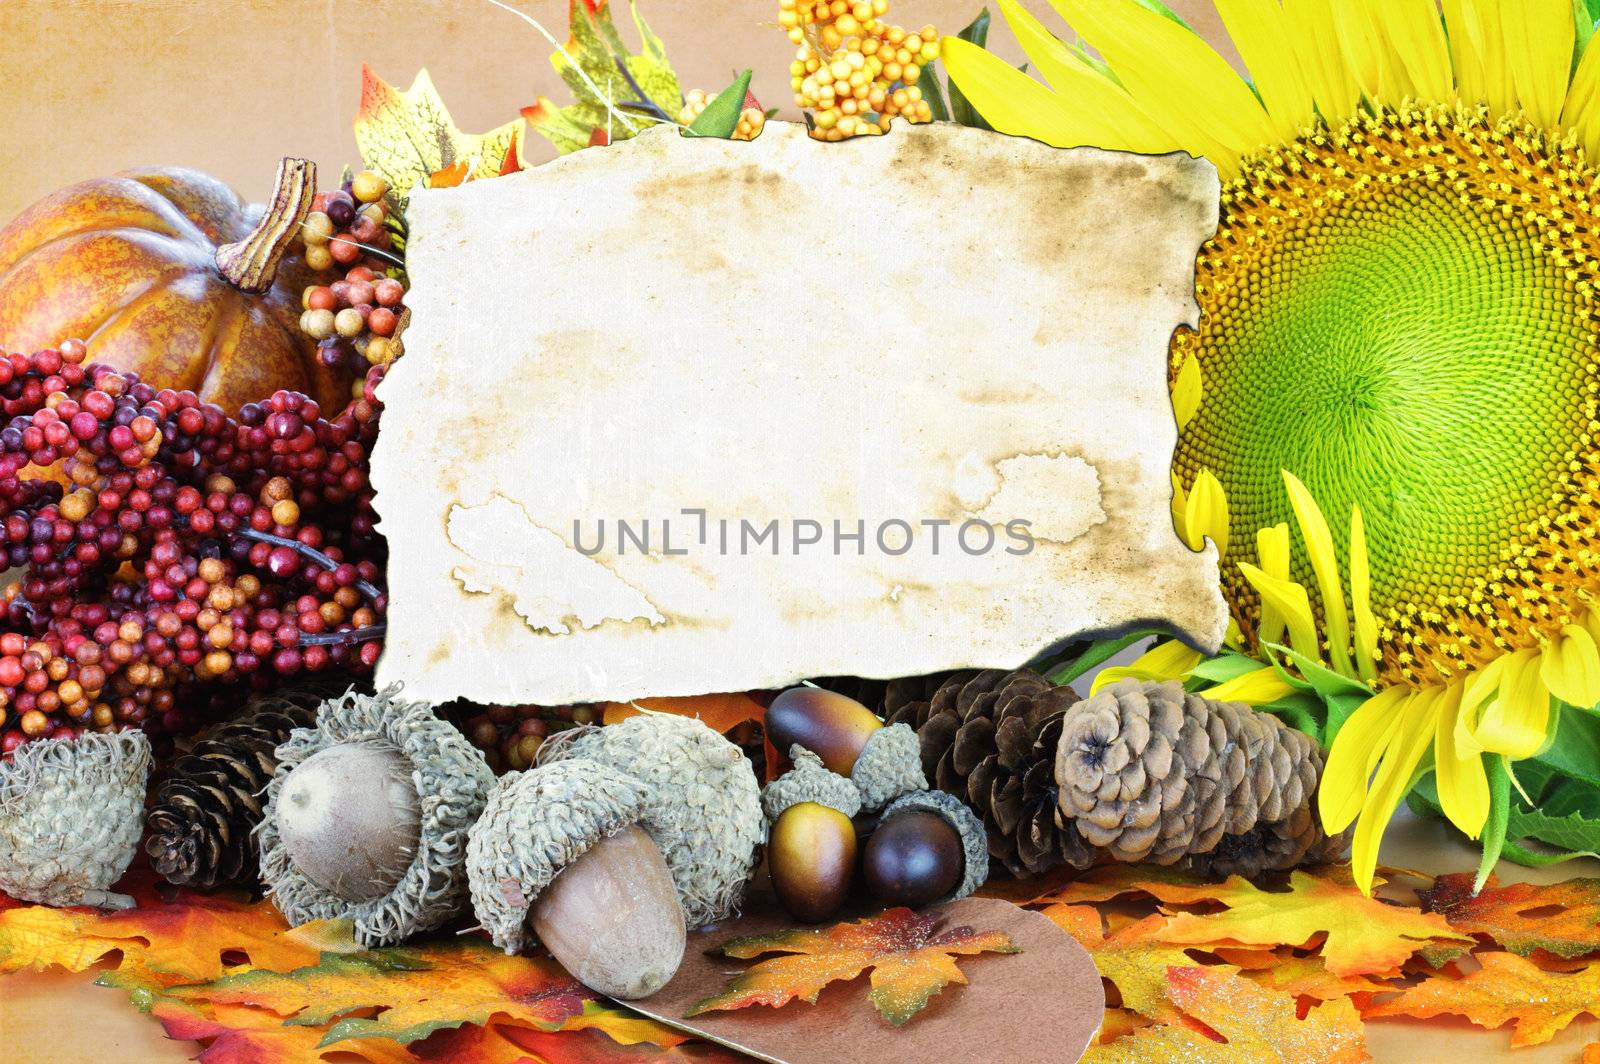 Autumn Display by StephanieFrey